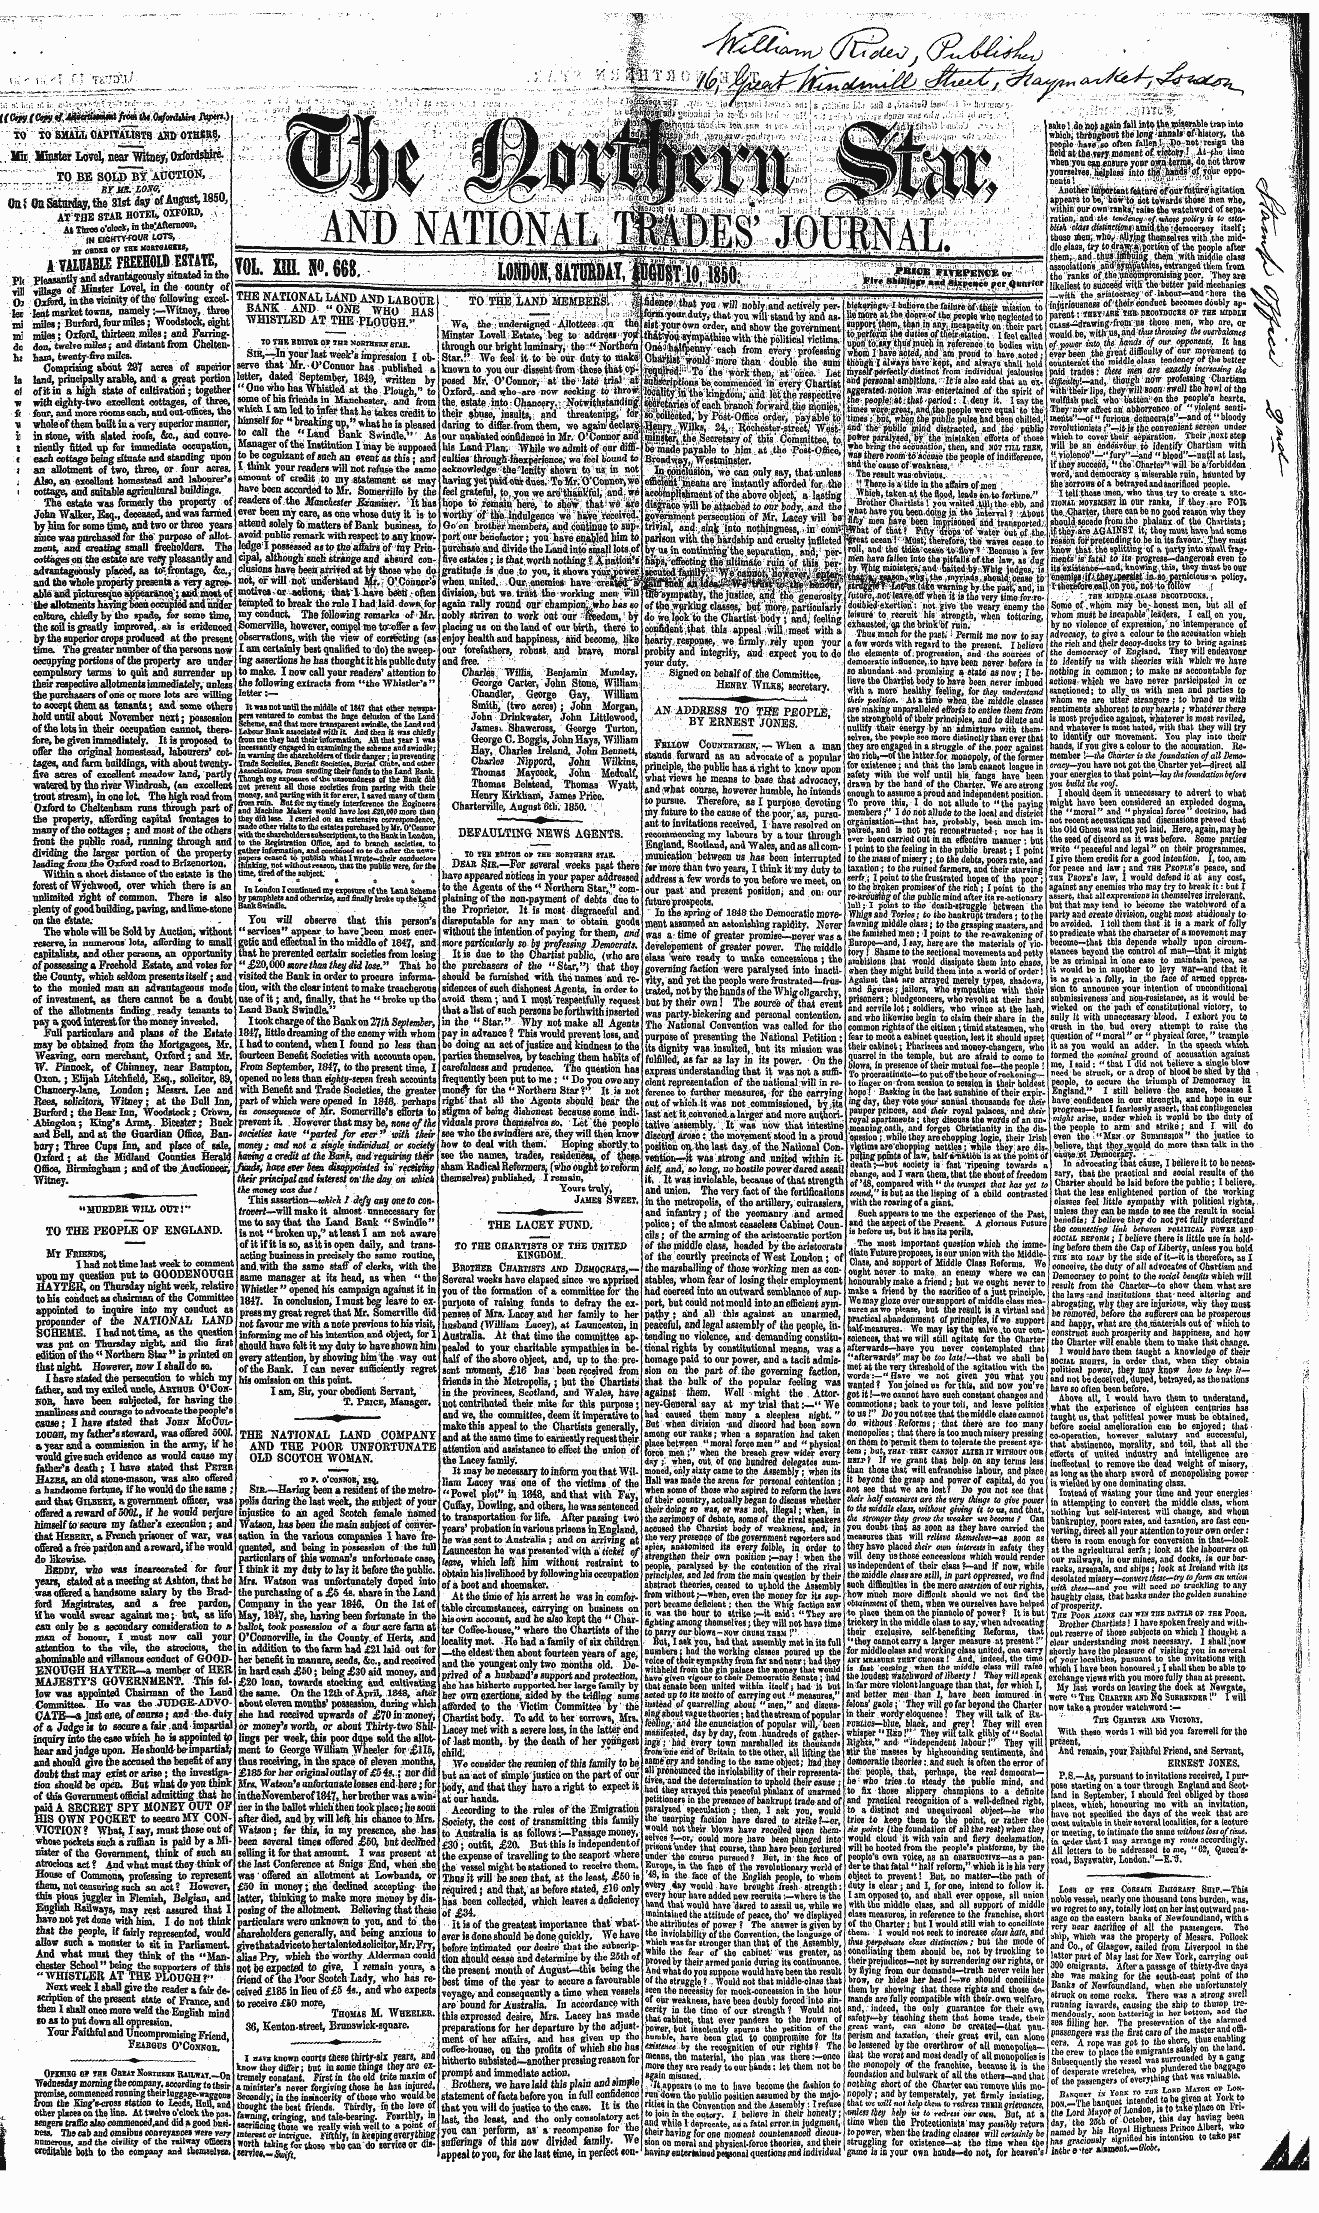 Northern Star (1837-1852): jS F Y, 2nd edition - To/ To Bmmiii (Temwts Ajrd : «Xi4a^